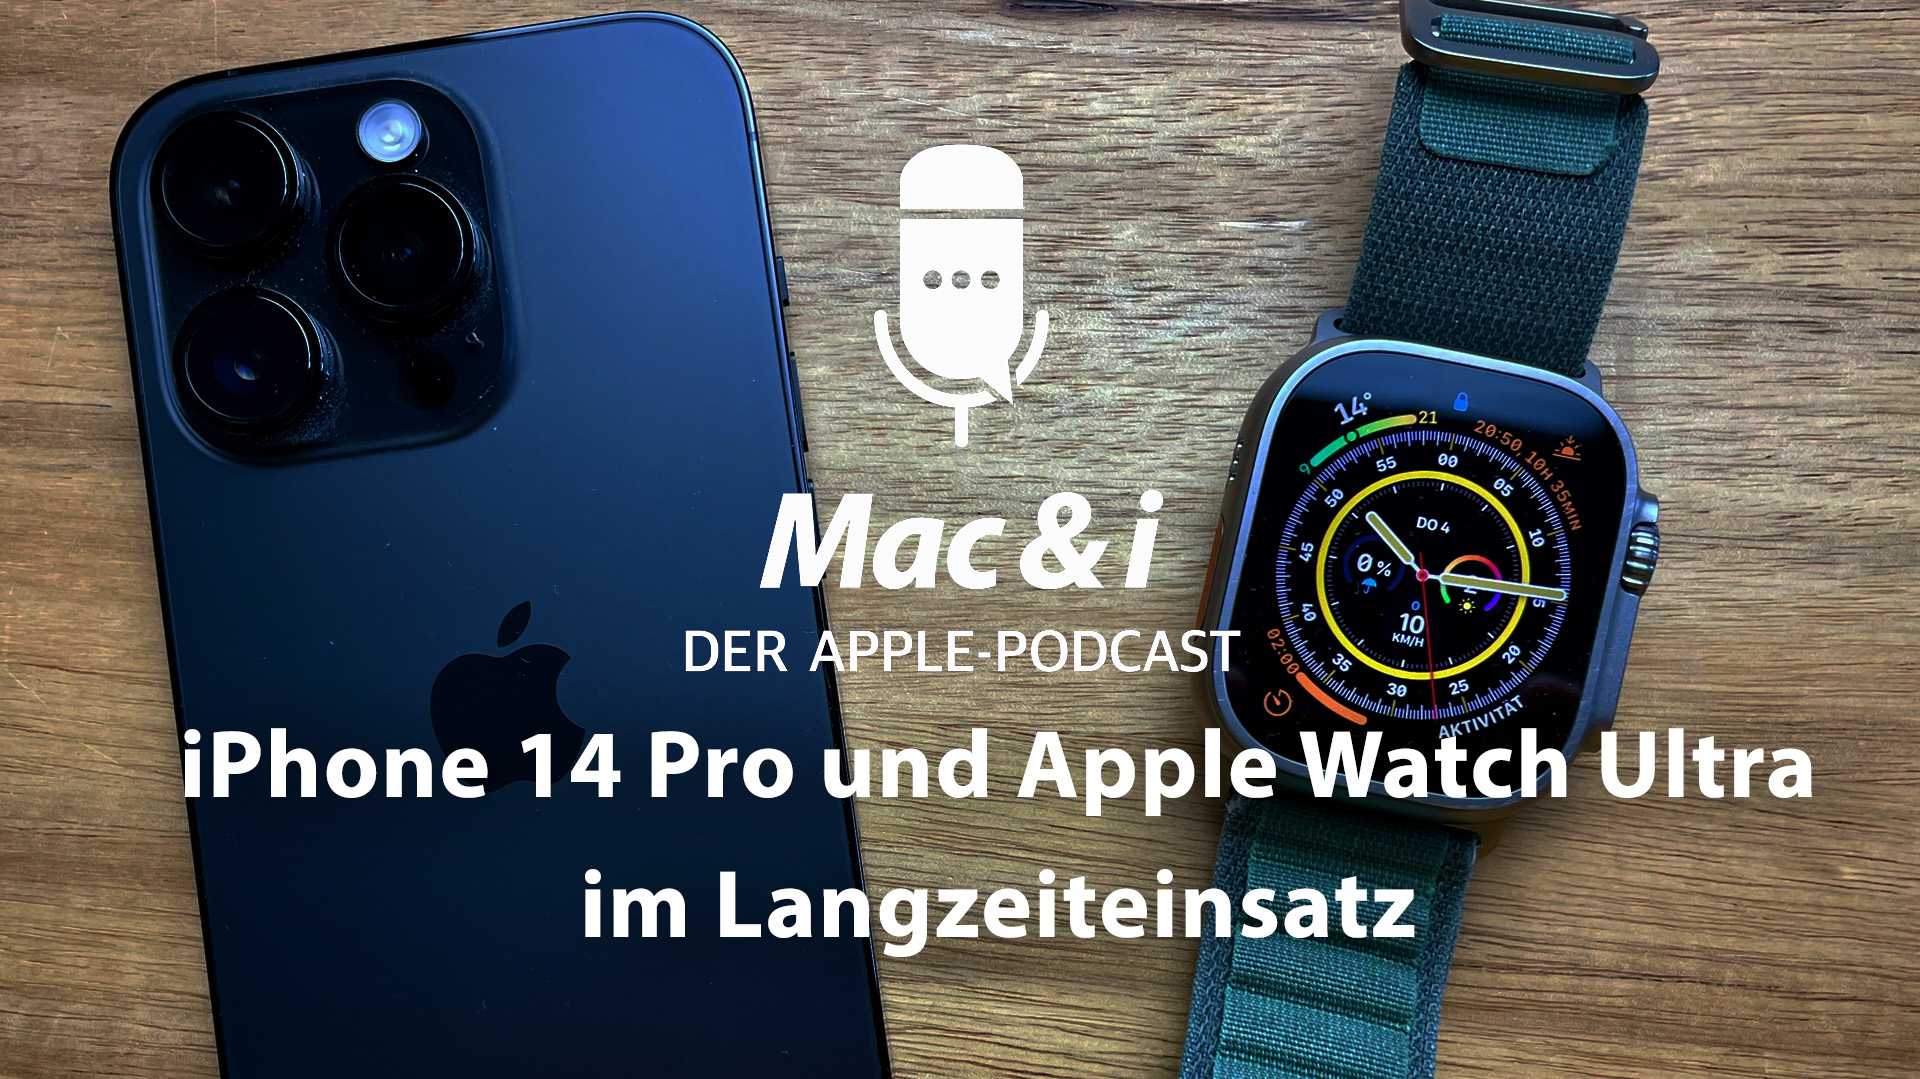 iPhone 14 Pro und Apple Watch Ultra – Episode 44 des Mac & i-Podcasts